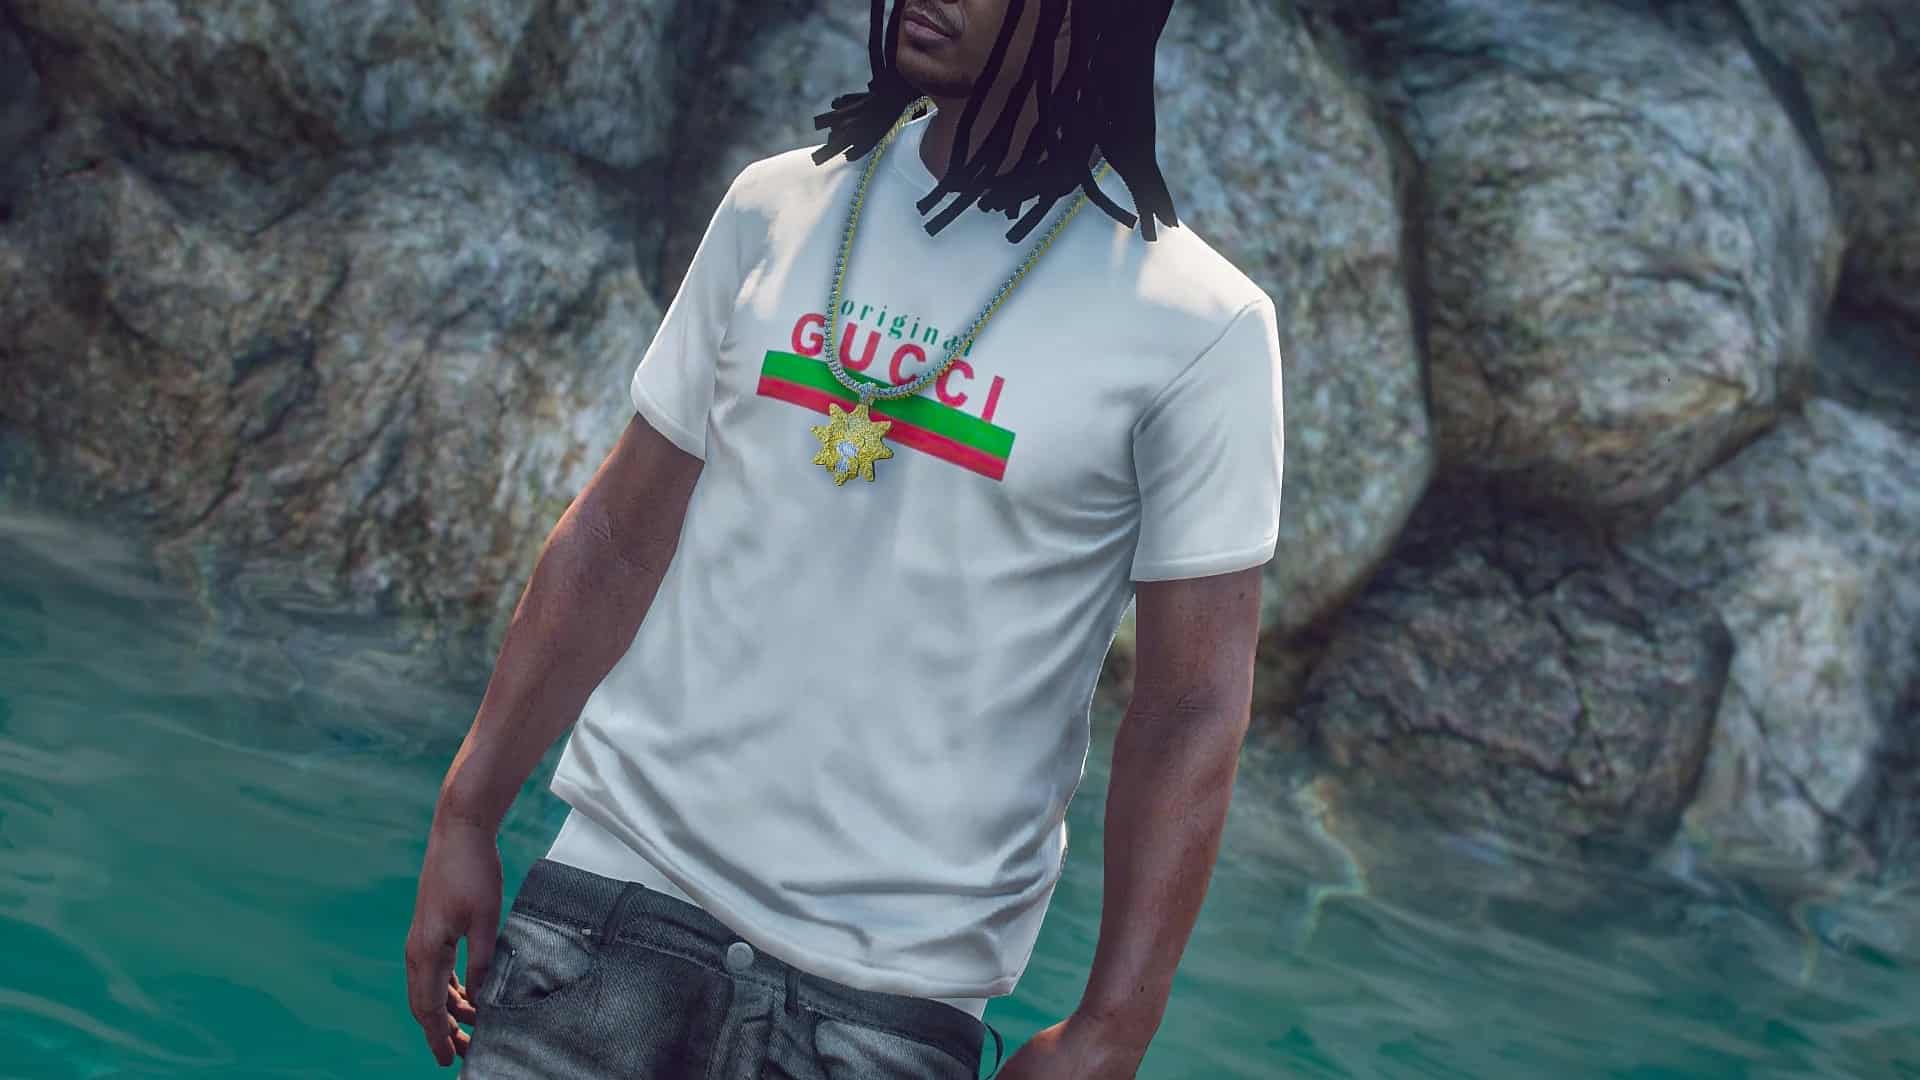 Gucci shirts for mp male(fivem ready) 1.0 - GTA Mod | Grand Theft Auto 5 Mod